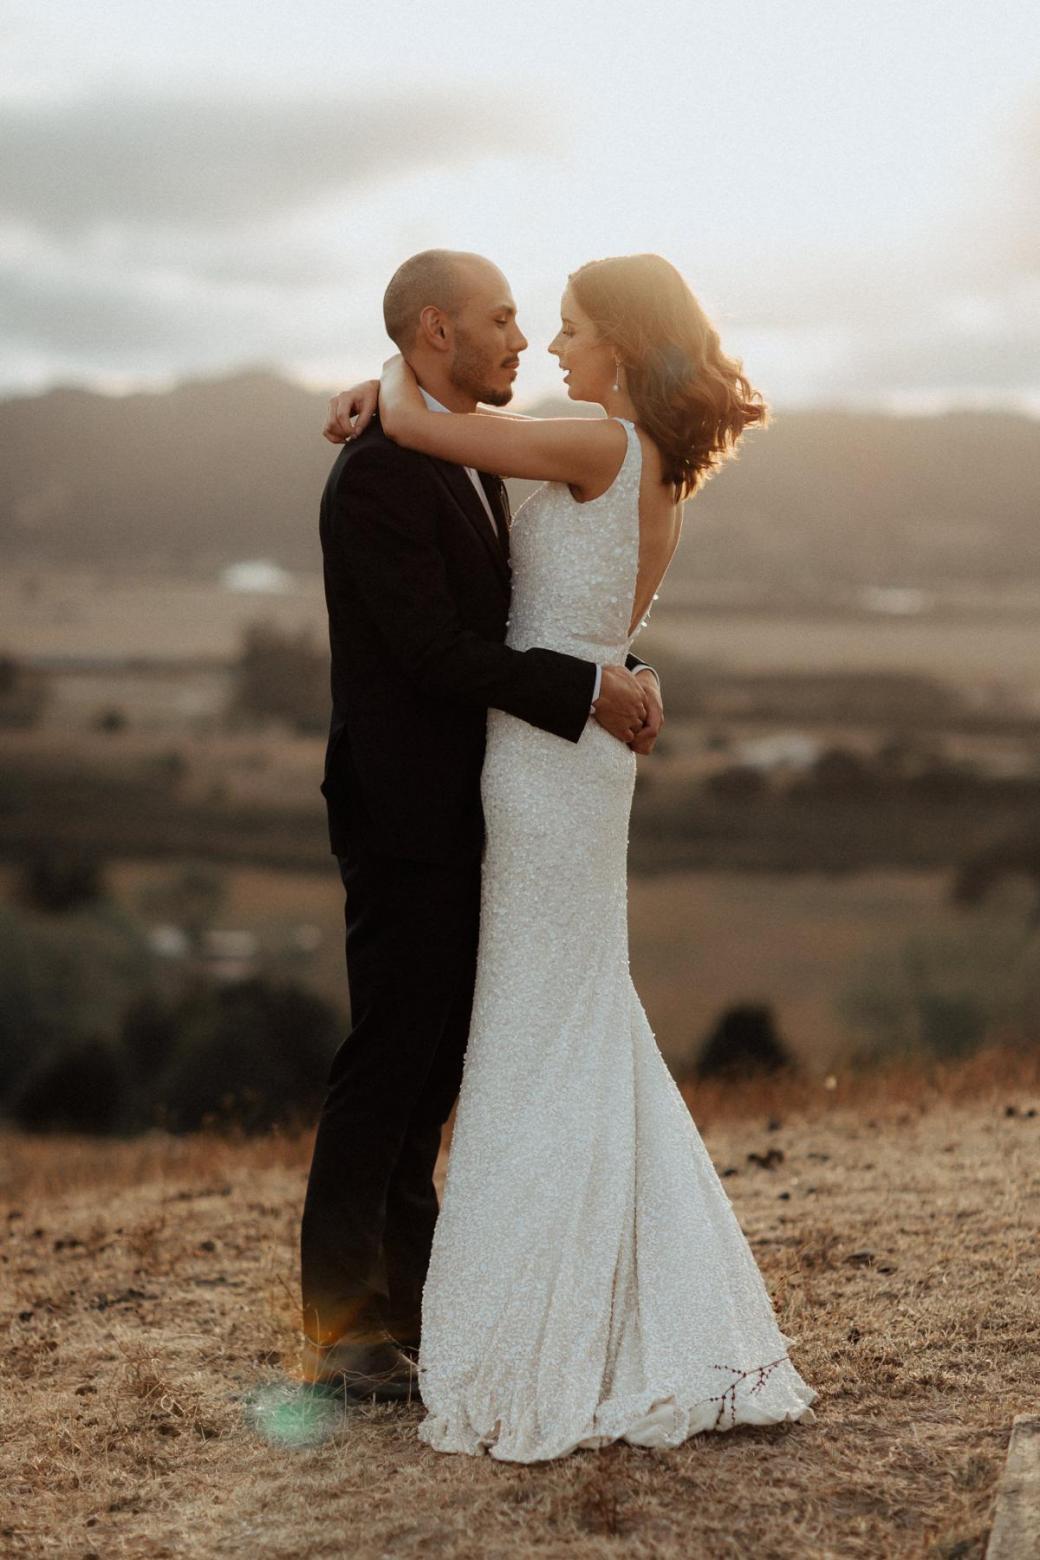 KWH bride Tash sharing intimate moment with husband Josh at sunset; wearing the Lola wedding dress.